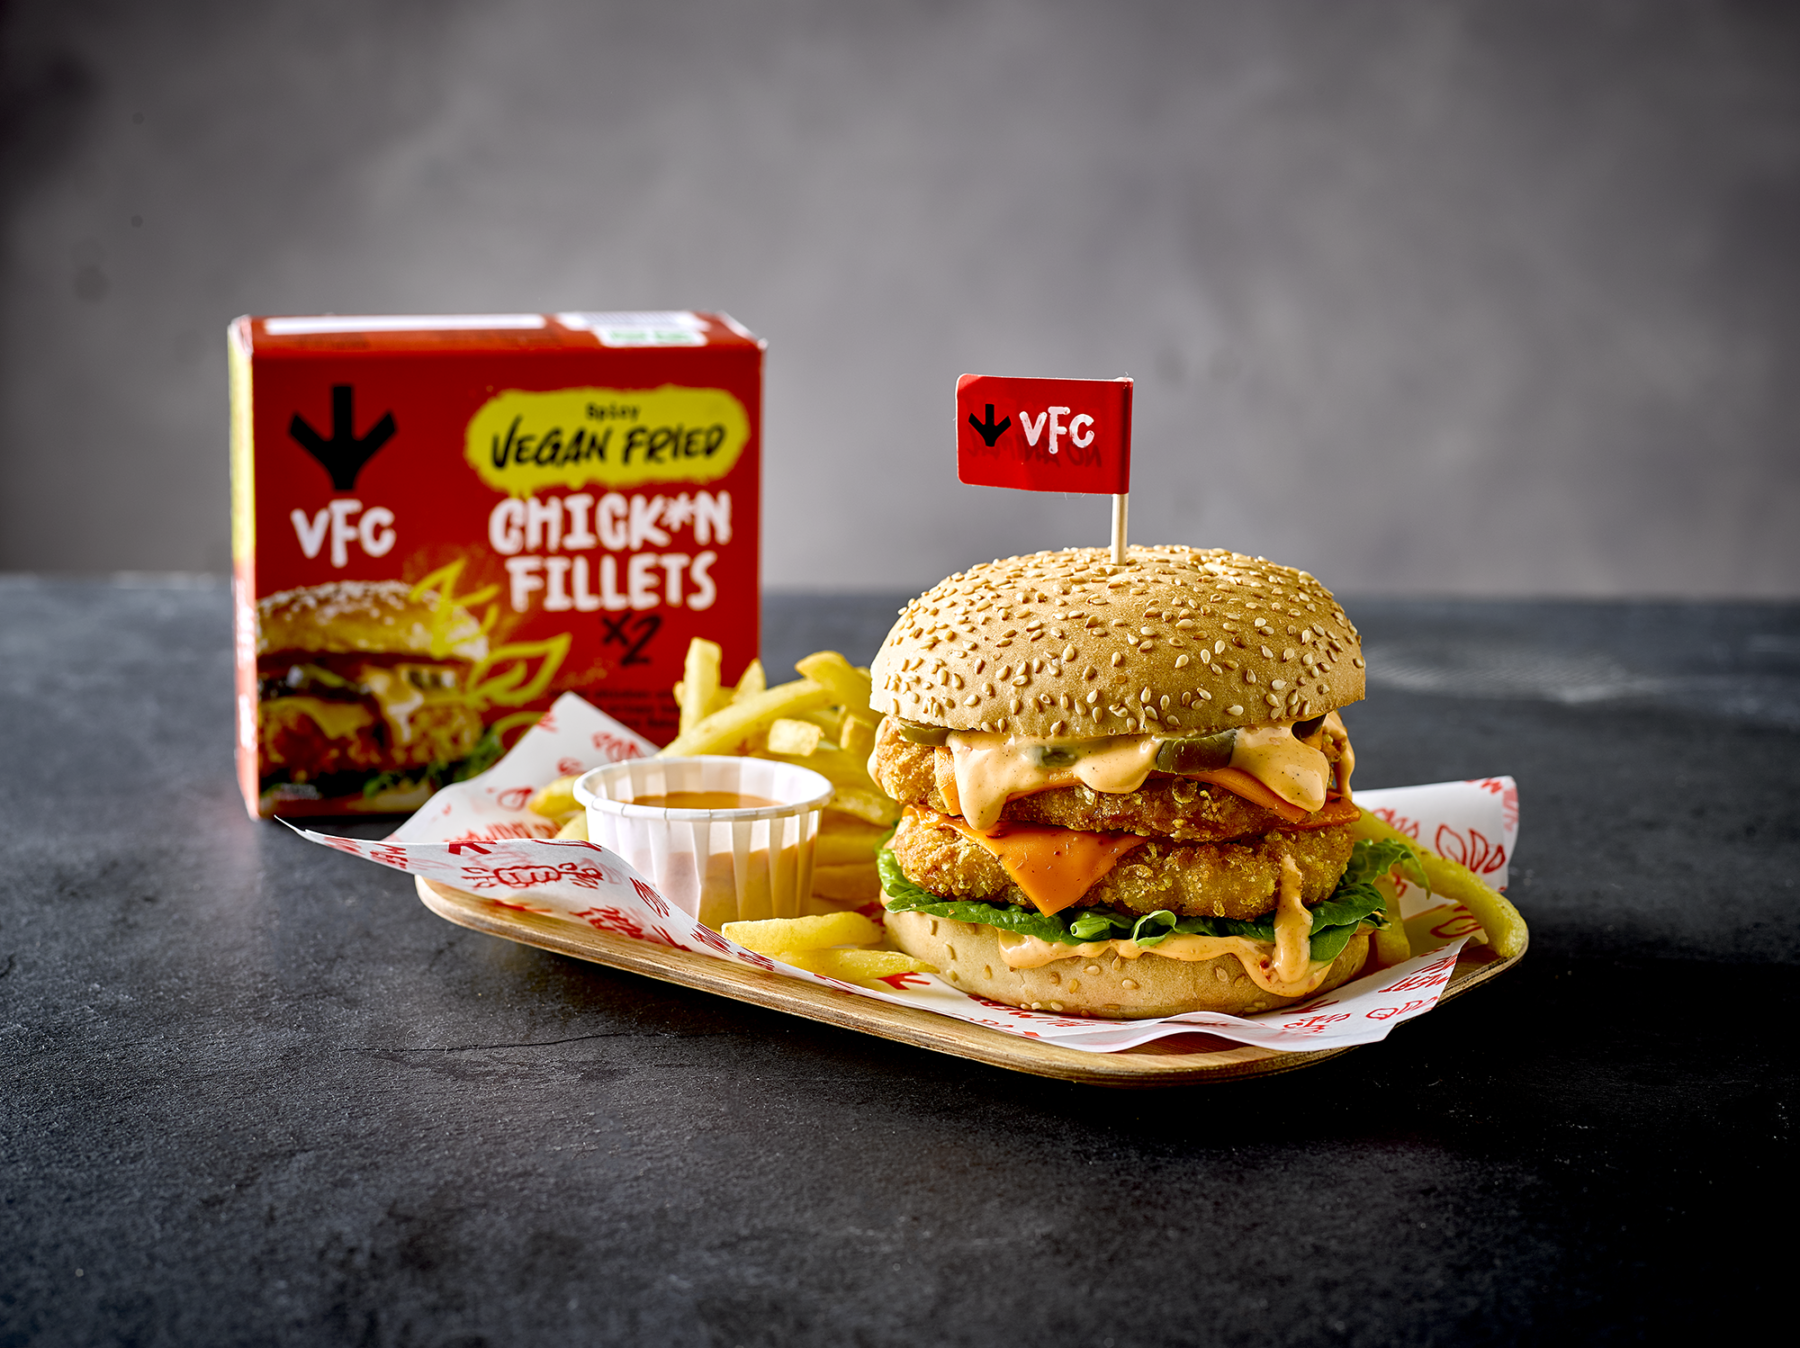 VFC Spicy Fillet Chick*n Burger